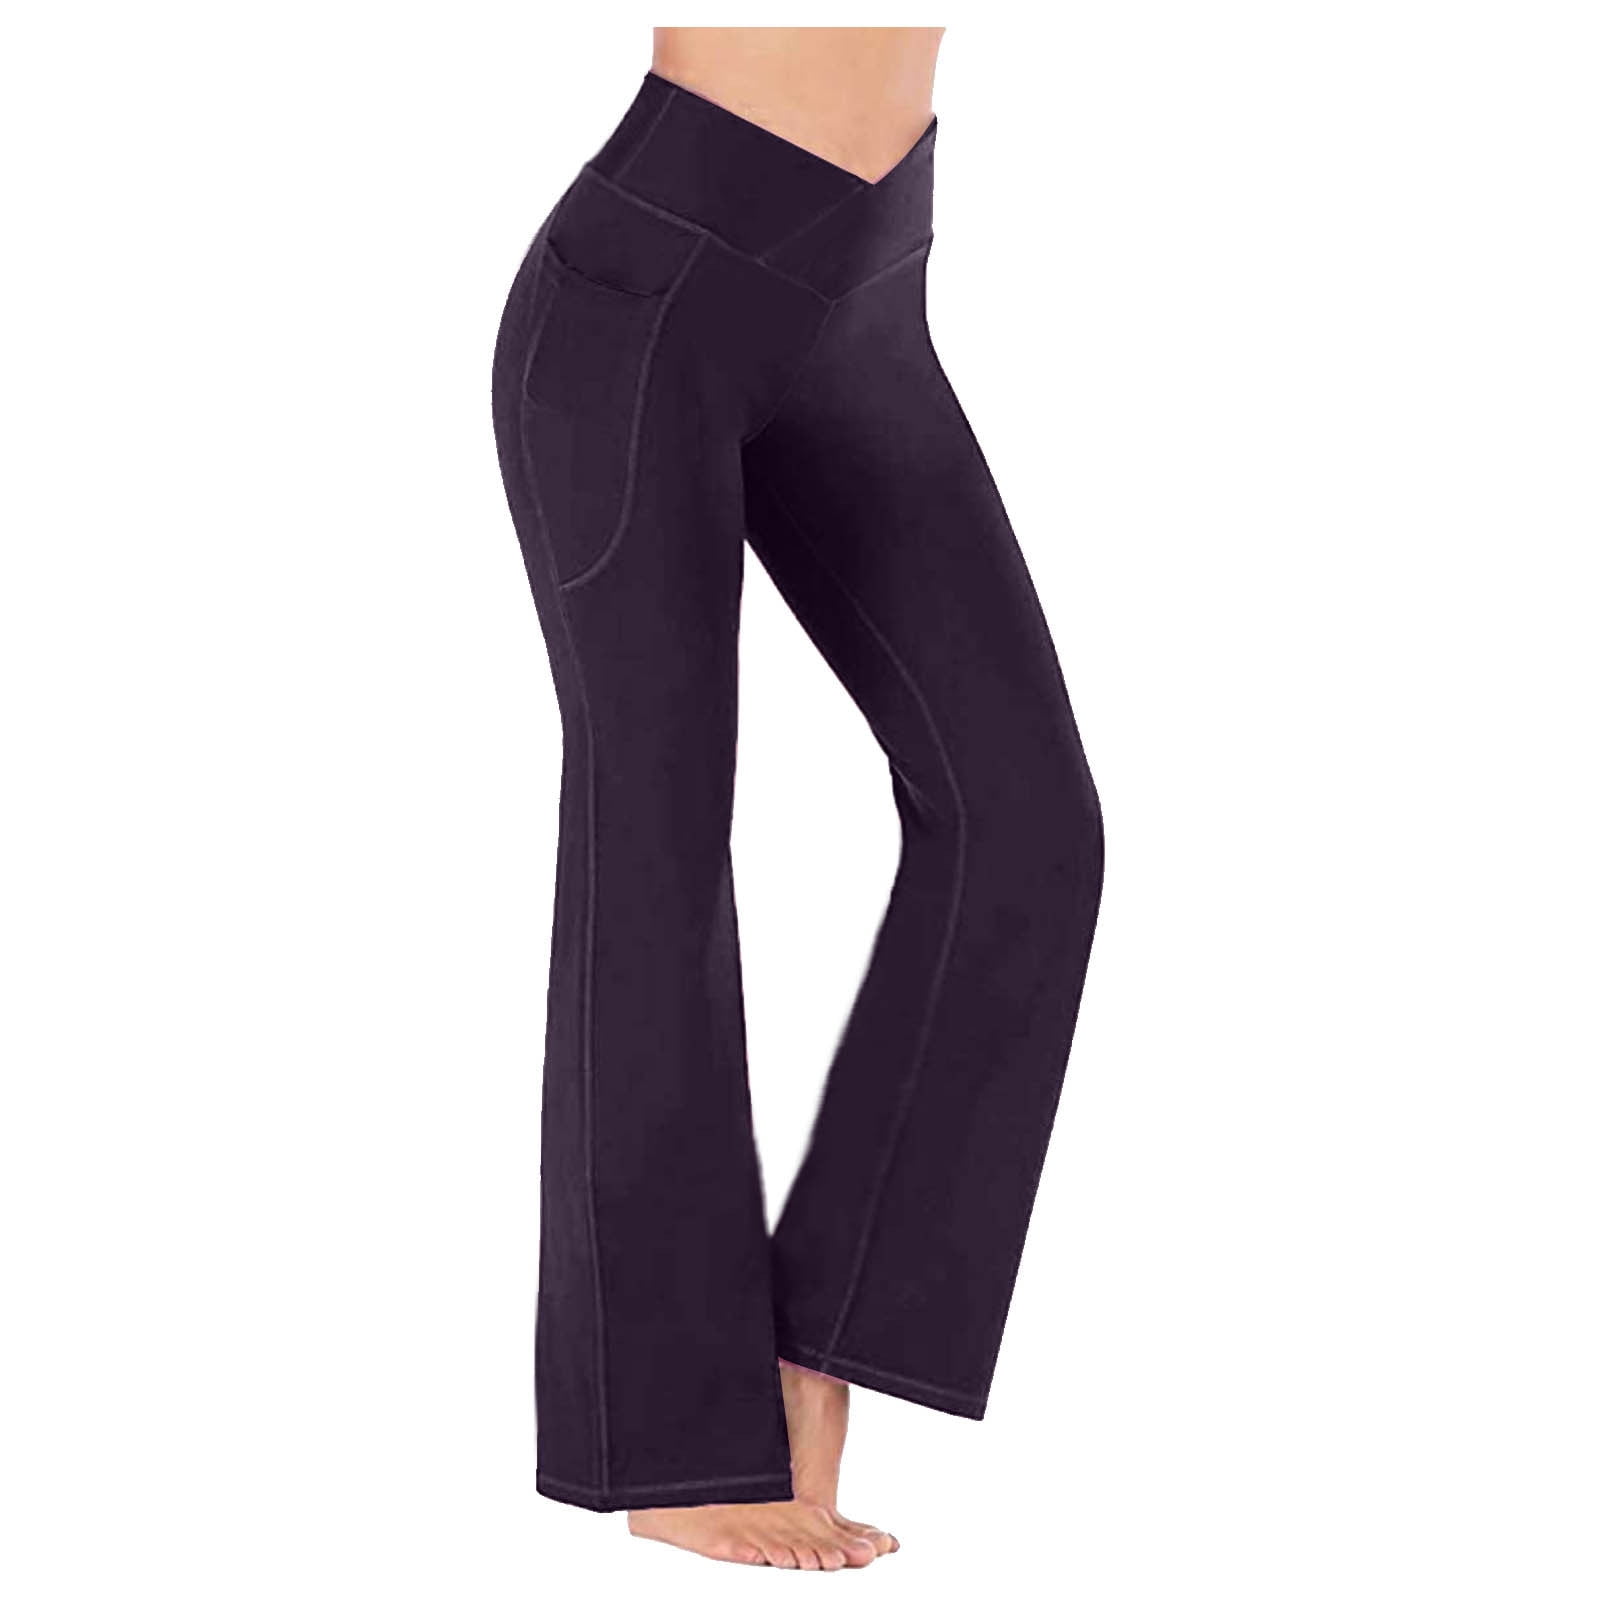 Scyoekwg Women's Yoga Pants Flare Leggings High Waist V Cross Stretchy Bell  Bottoms Pants Sports Workout Yoga Pants with Pockets Coffee S 